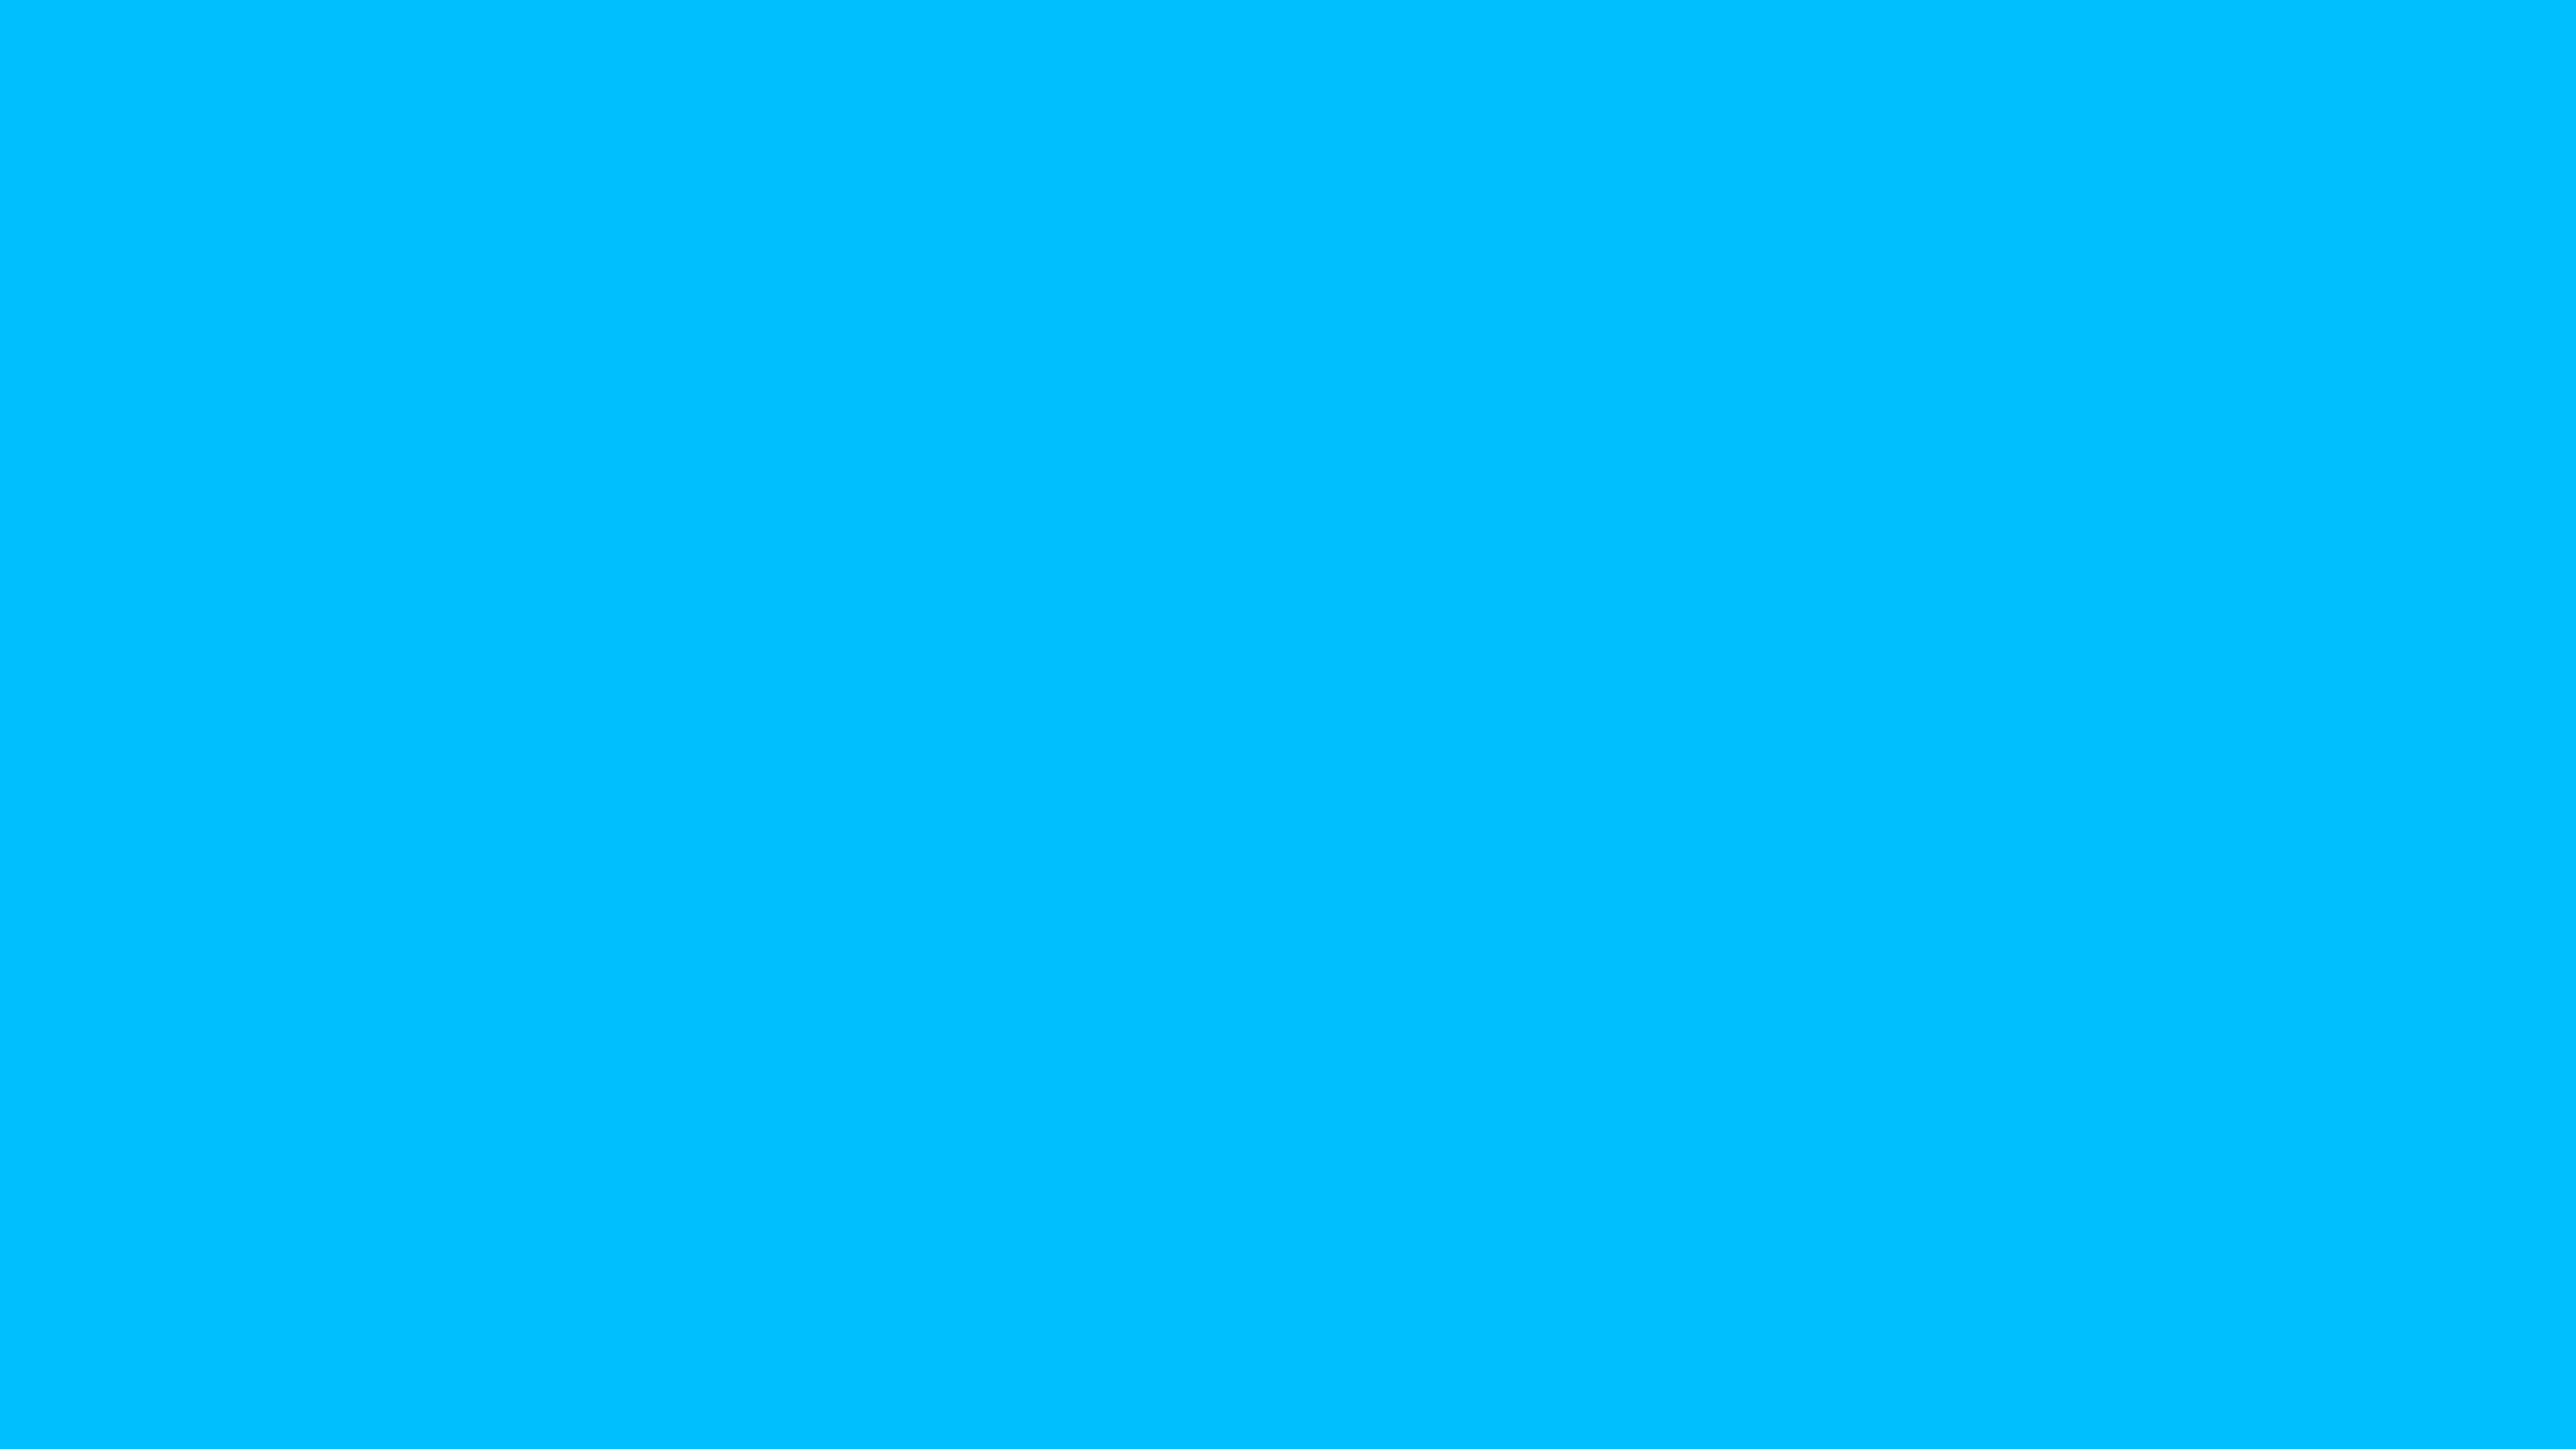 Deep Sky Blue Color | 00bfff information | Hsl | Rgb | Pantone